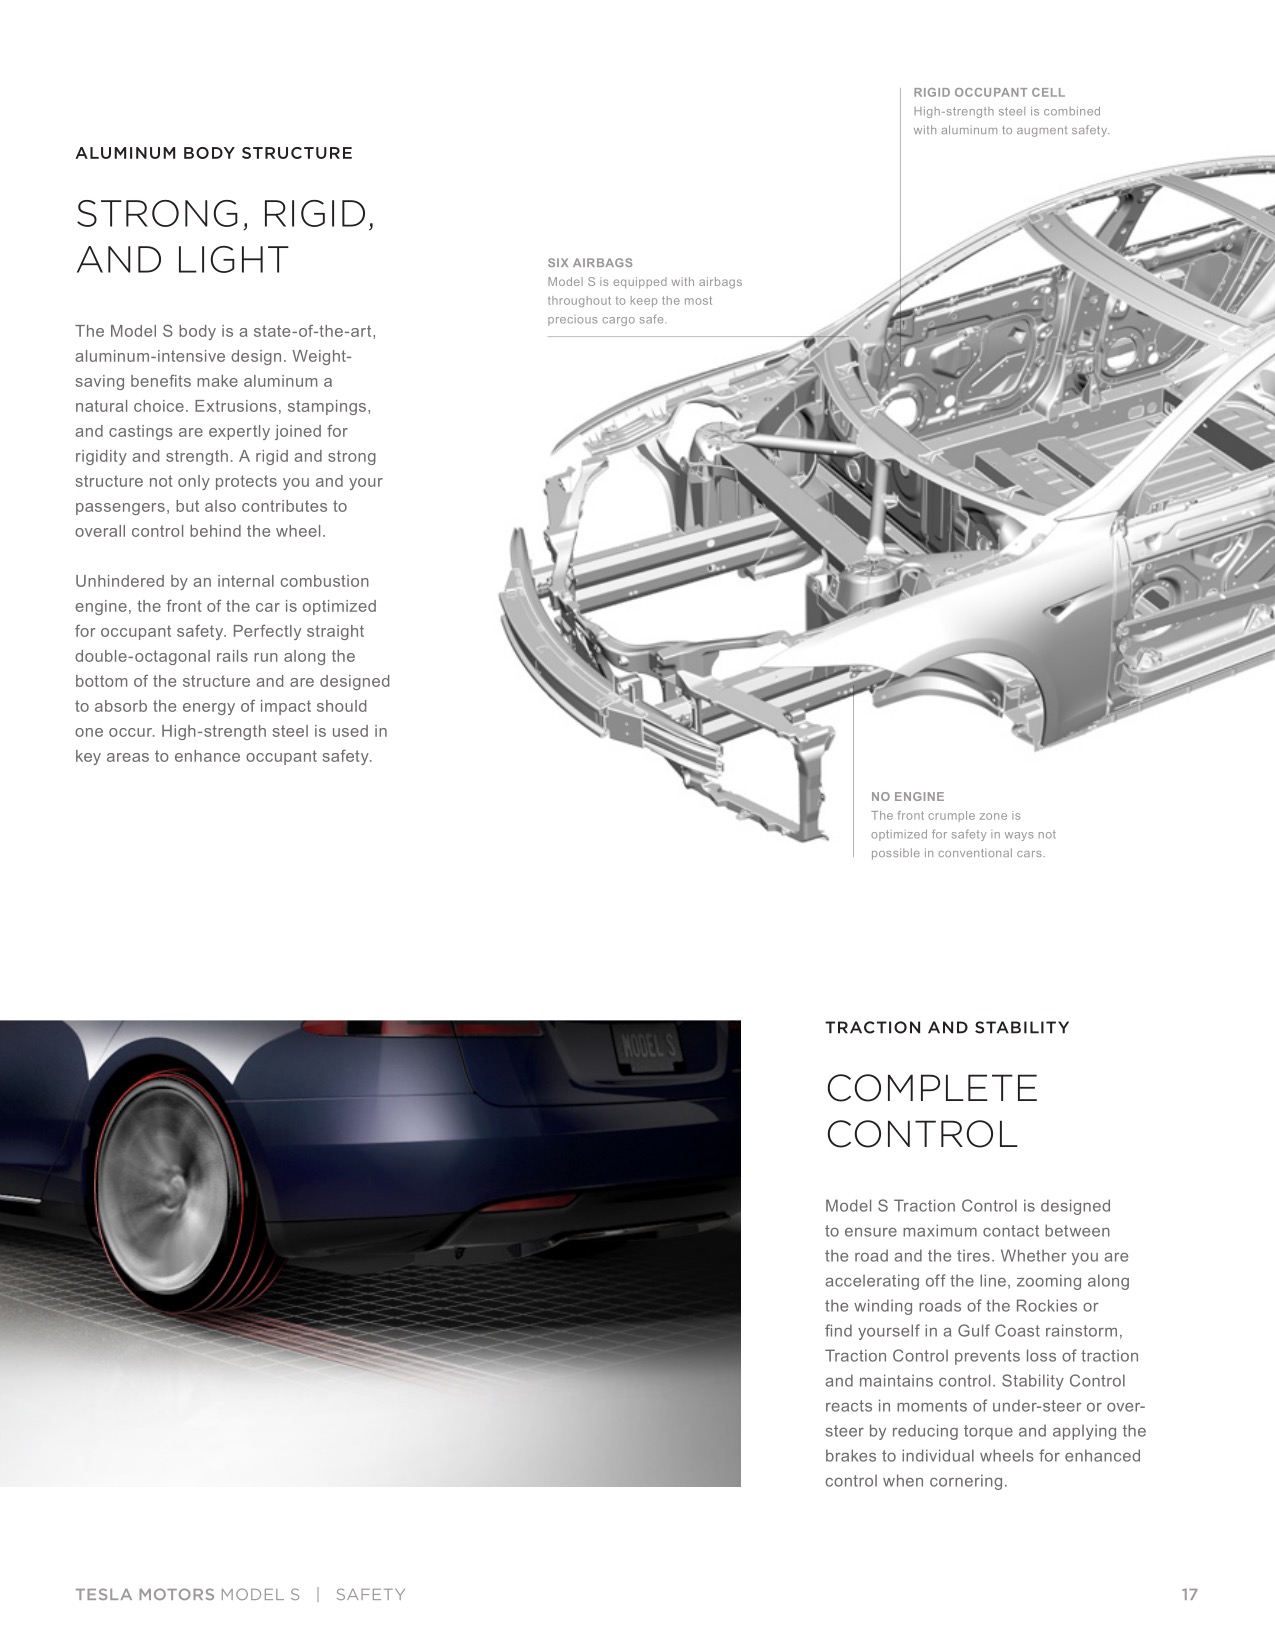 2014 Tesla Model S Brochure Page 10